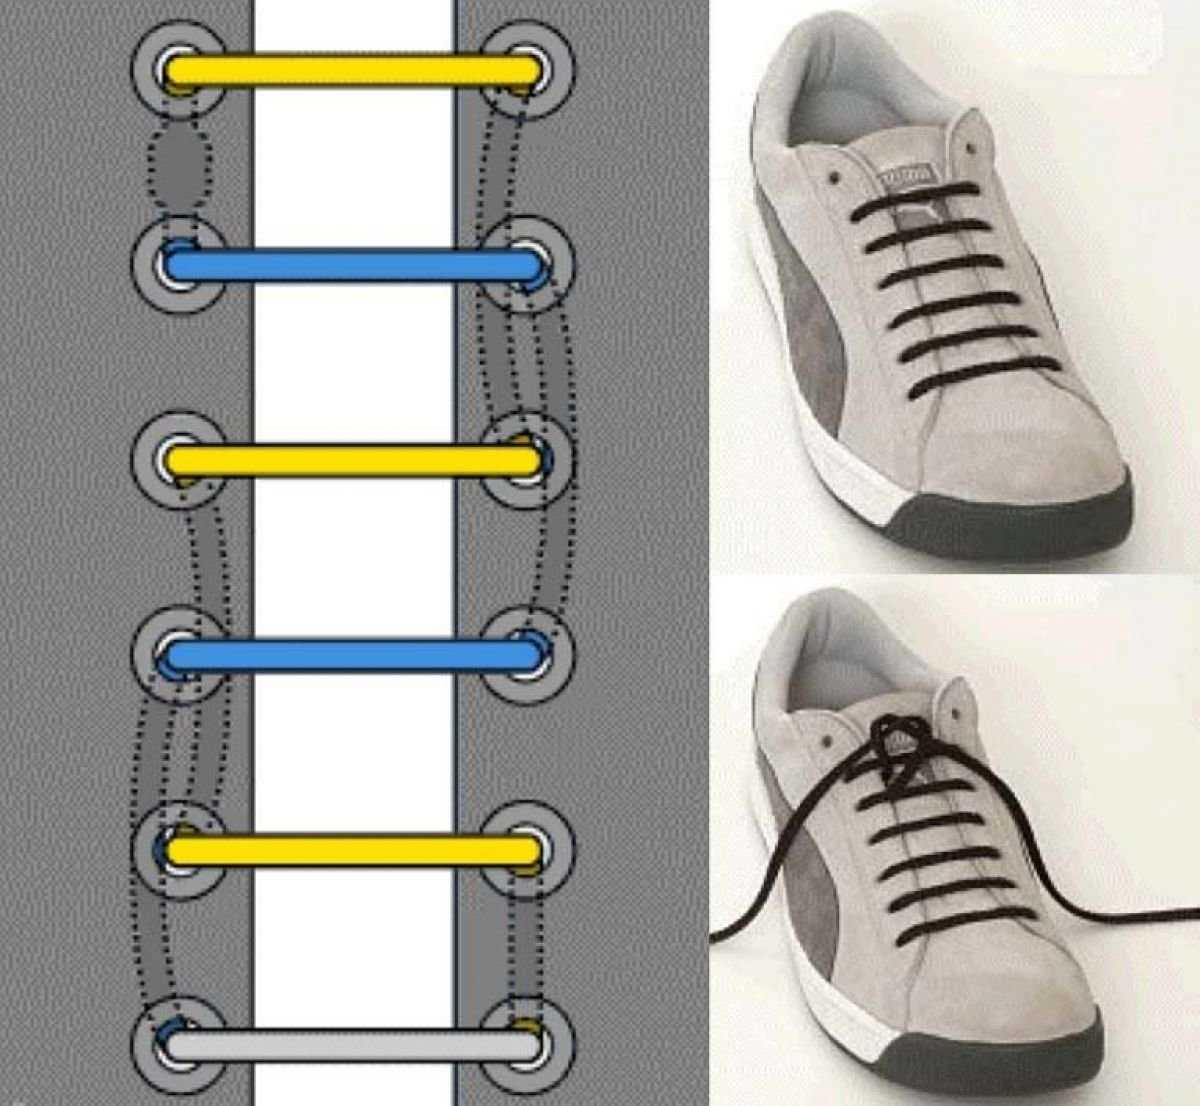 Как красиво надеть шнурки на кроссовки